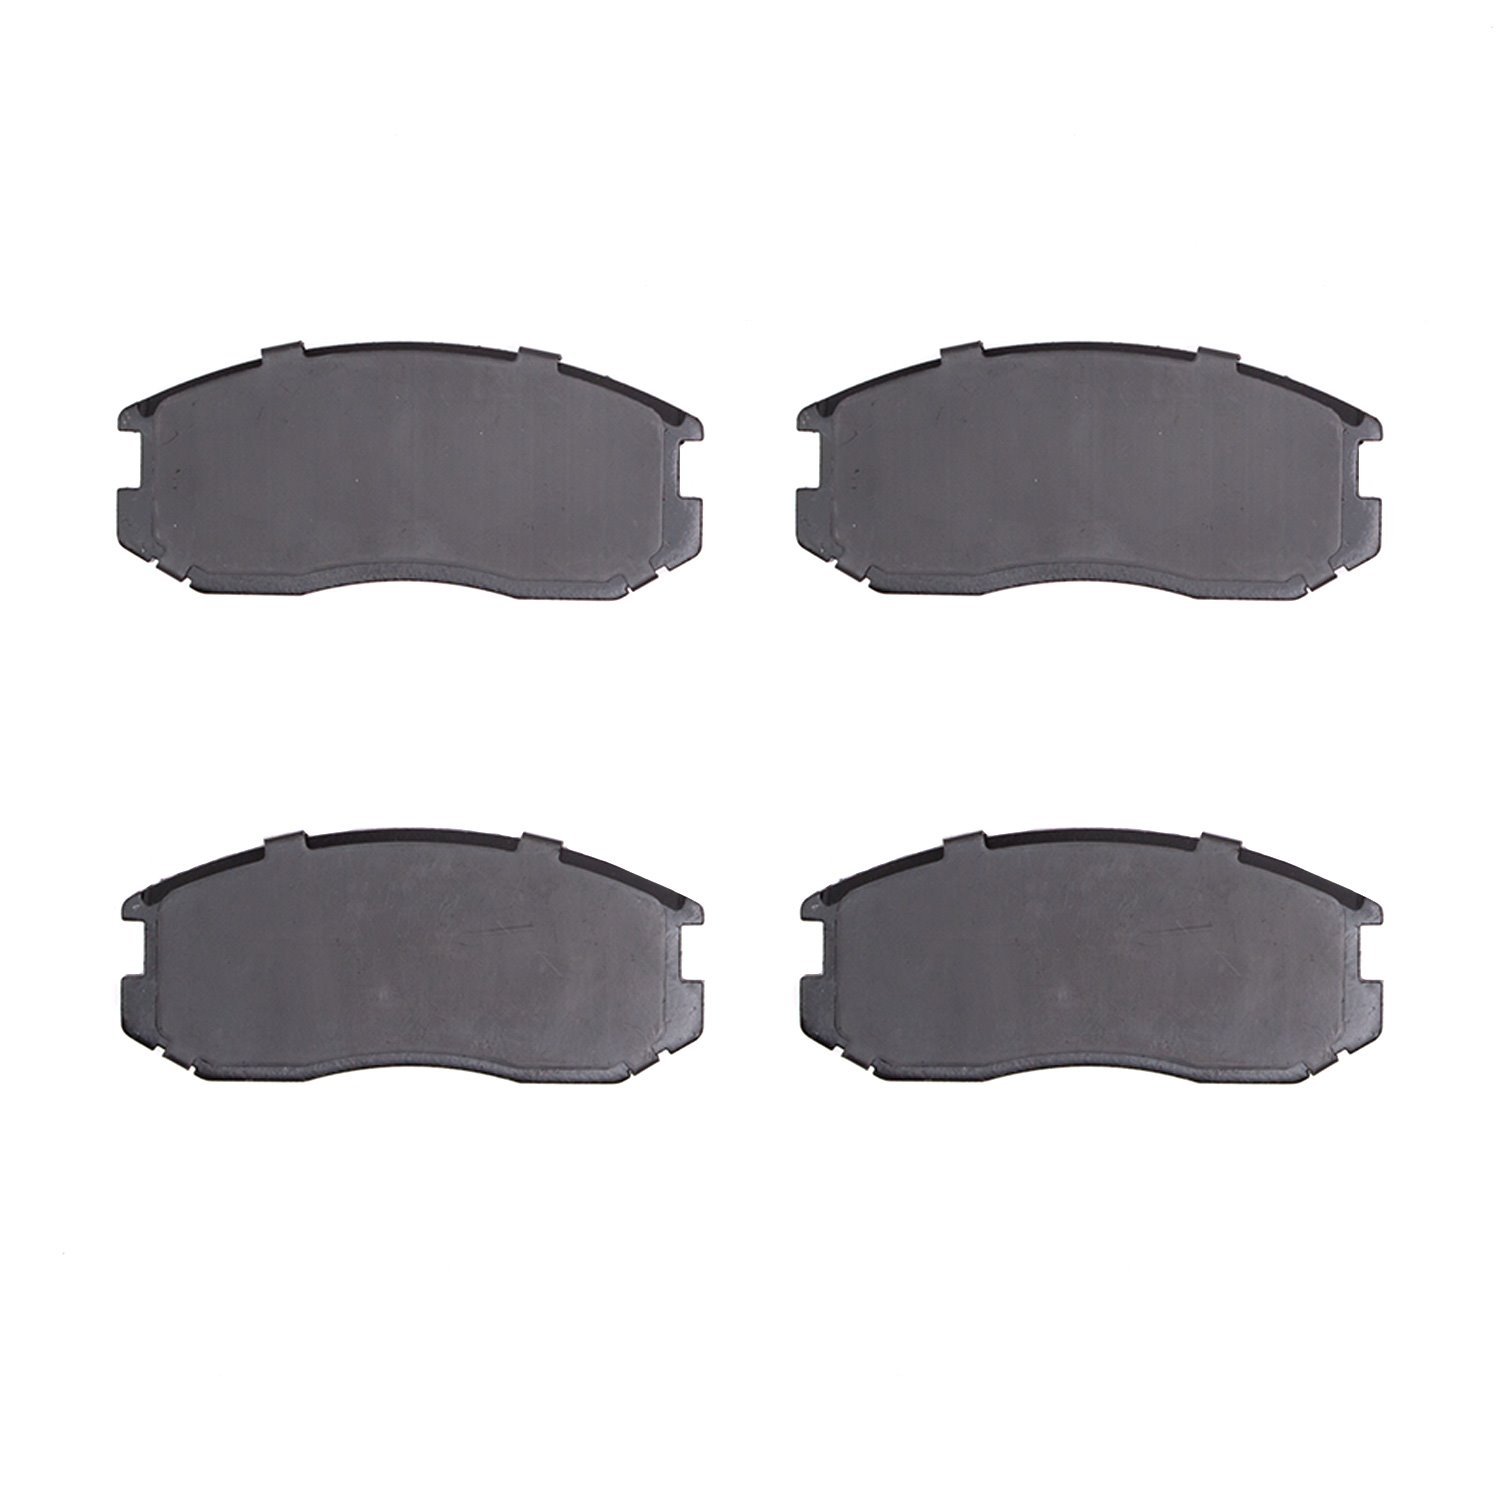 1551-0602-00 5000 Advanced Ceramic Brake Pads, 1991-2000 Multiple Makes/Models, Position: Front